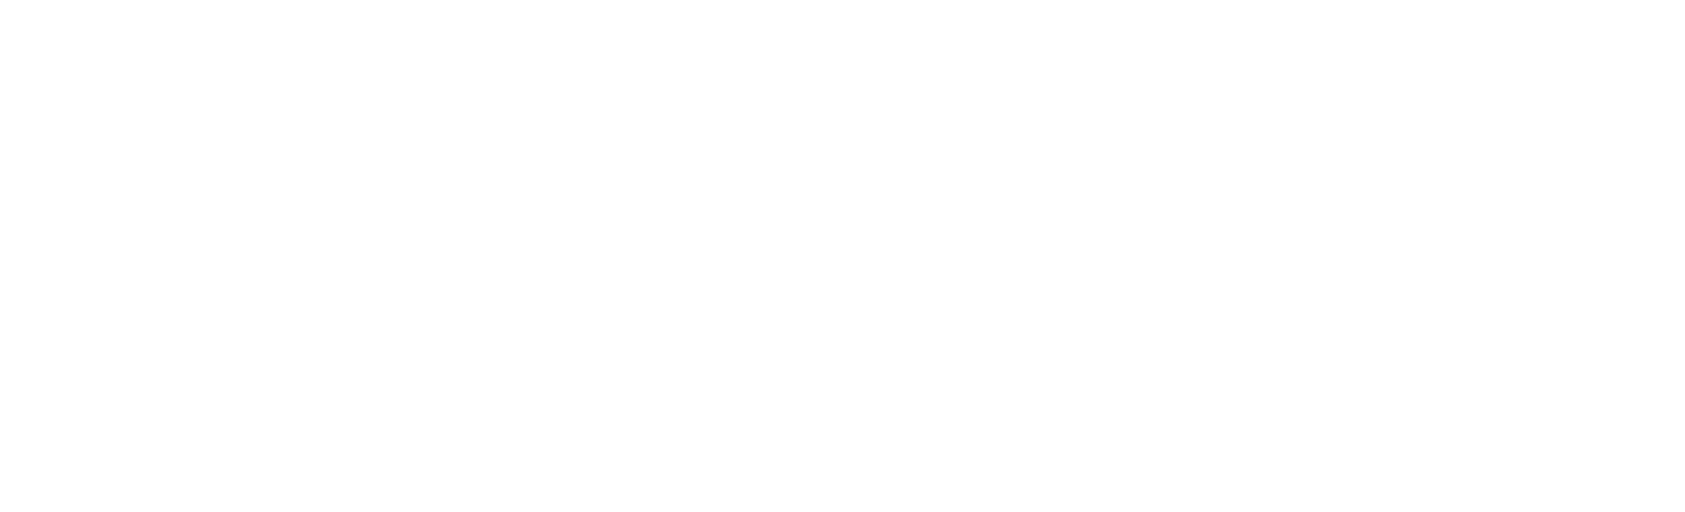 logo walmart